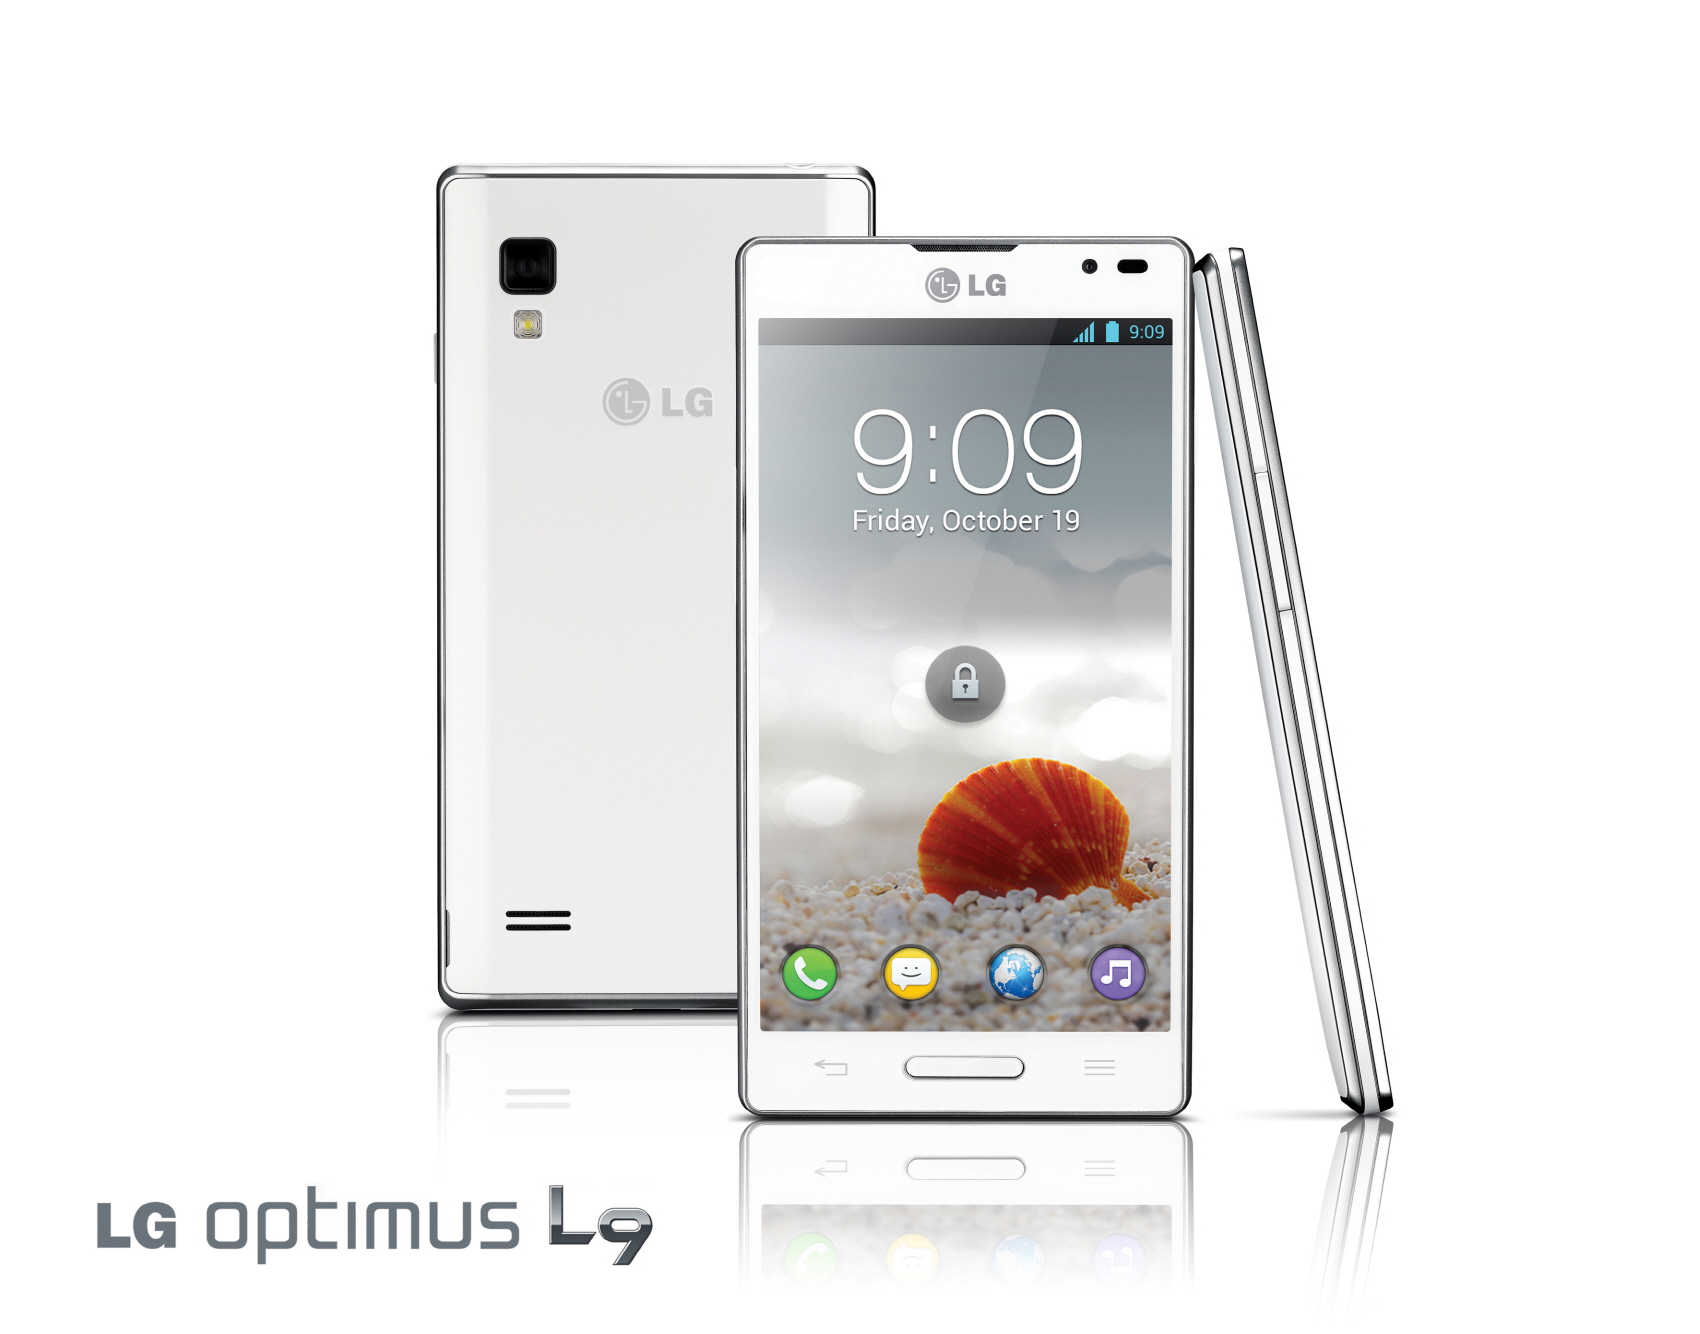 Optimus L9 Arrives to Complete the LG Optimus L Series